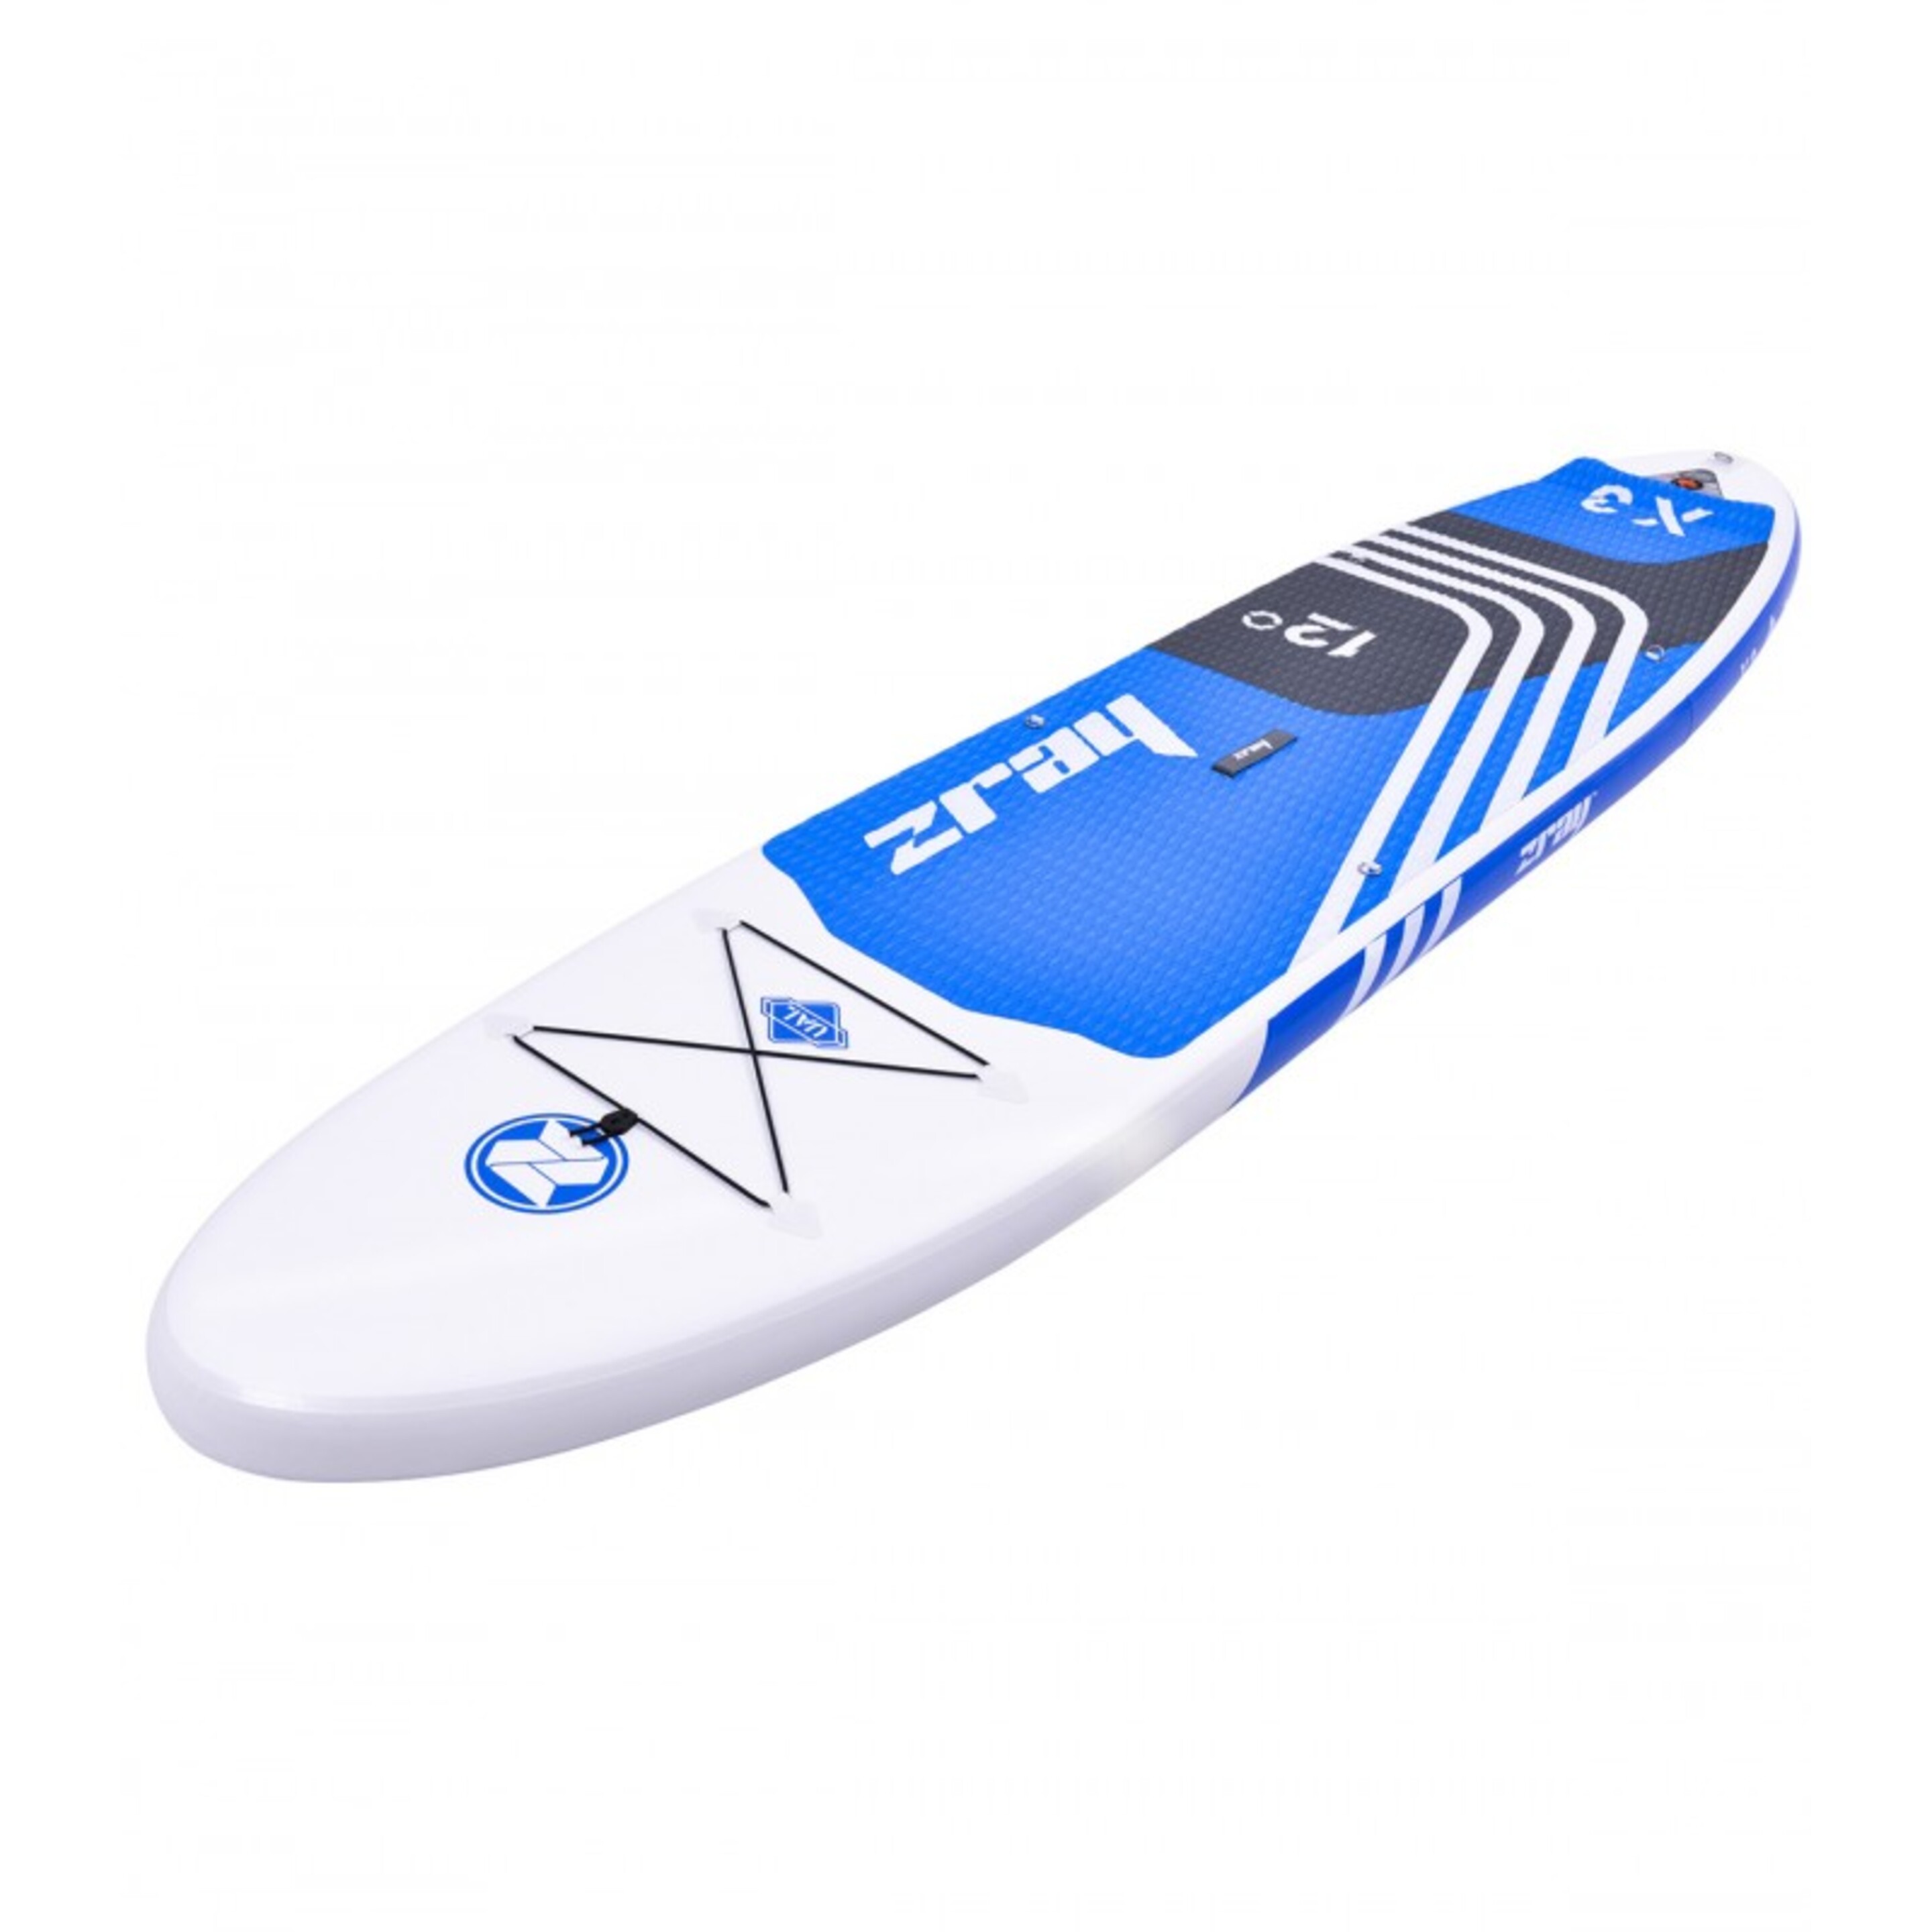 Tabla Paddle Surf Hinchable Zray X-rider X3 12,0 - Azul/Blanco  MKP